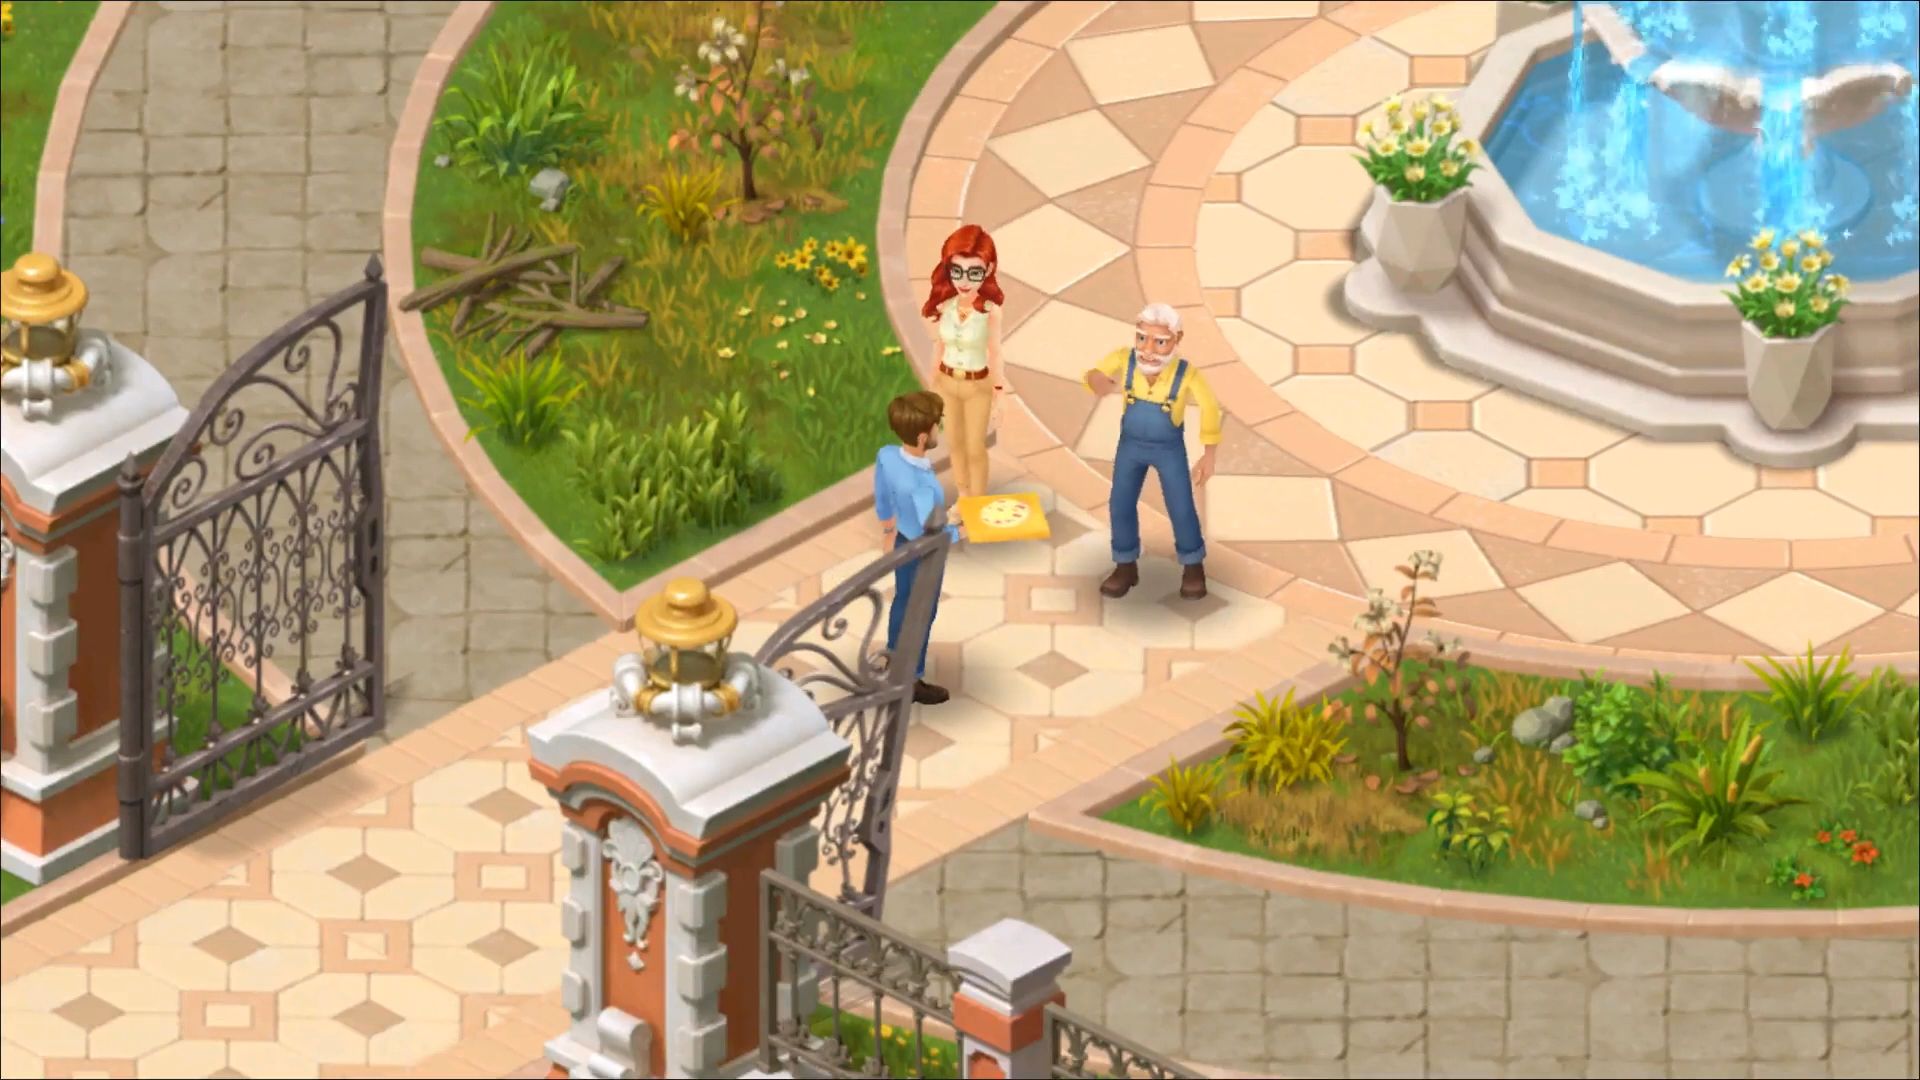 Garden Affairs - Android game screenshots.